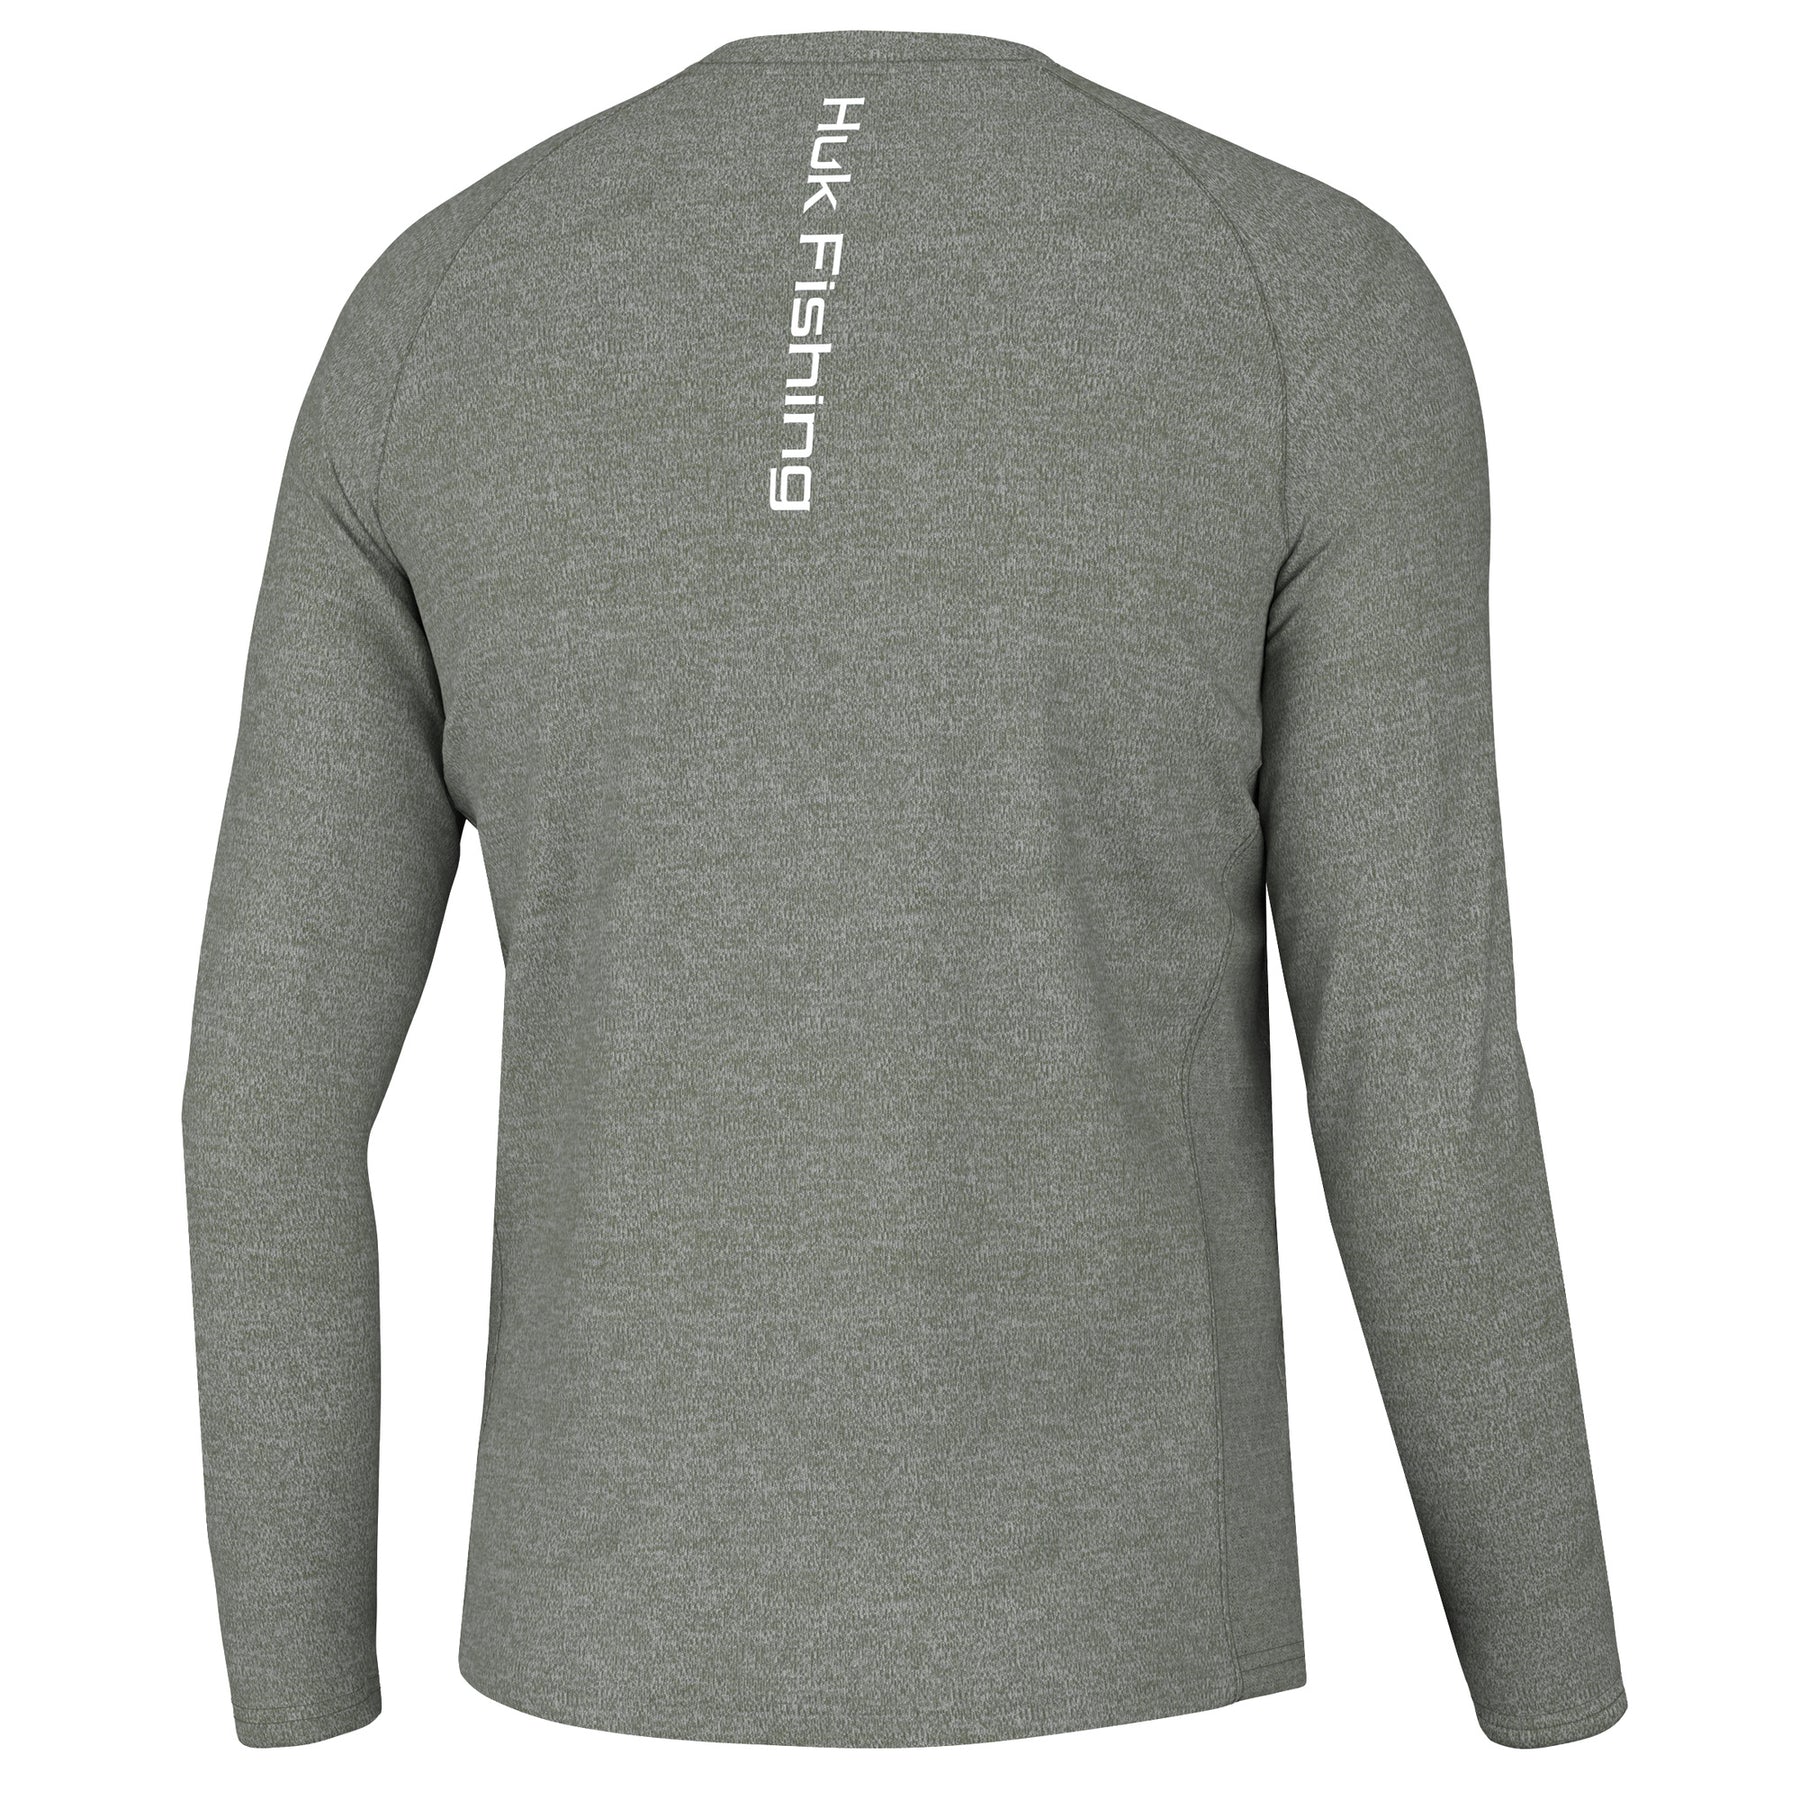 Huk Vented Pursuit Long Sleeve Shirt - Melton Tackle